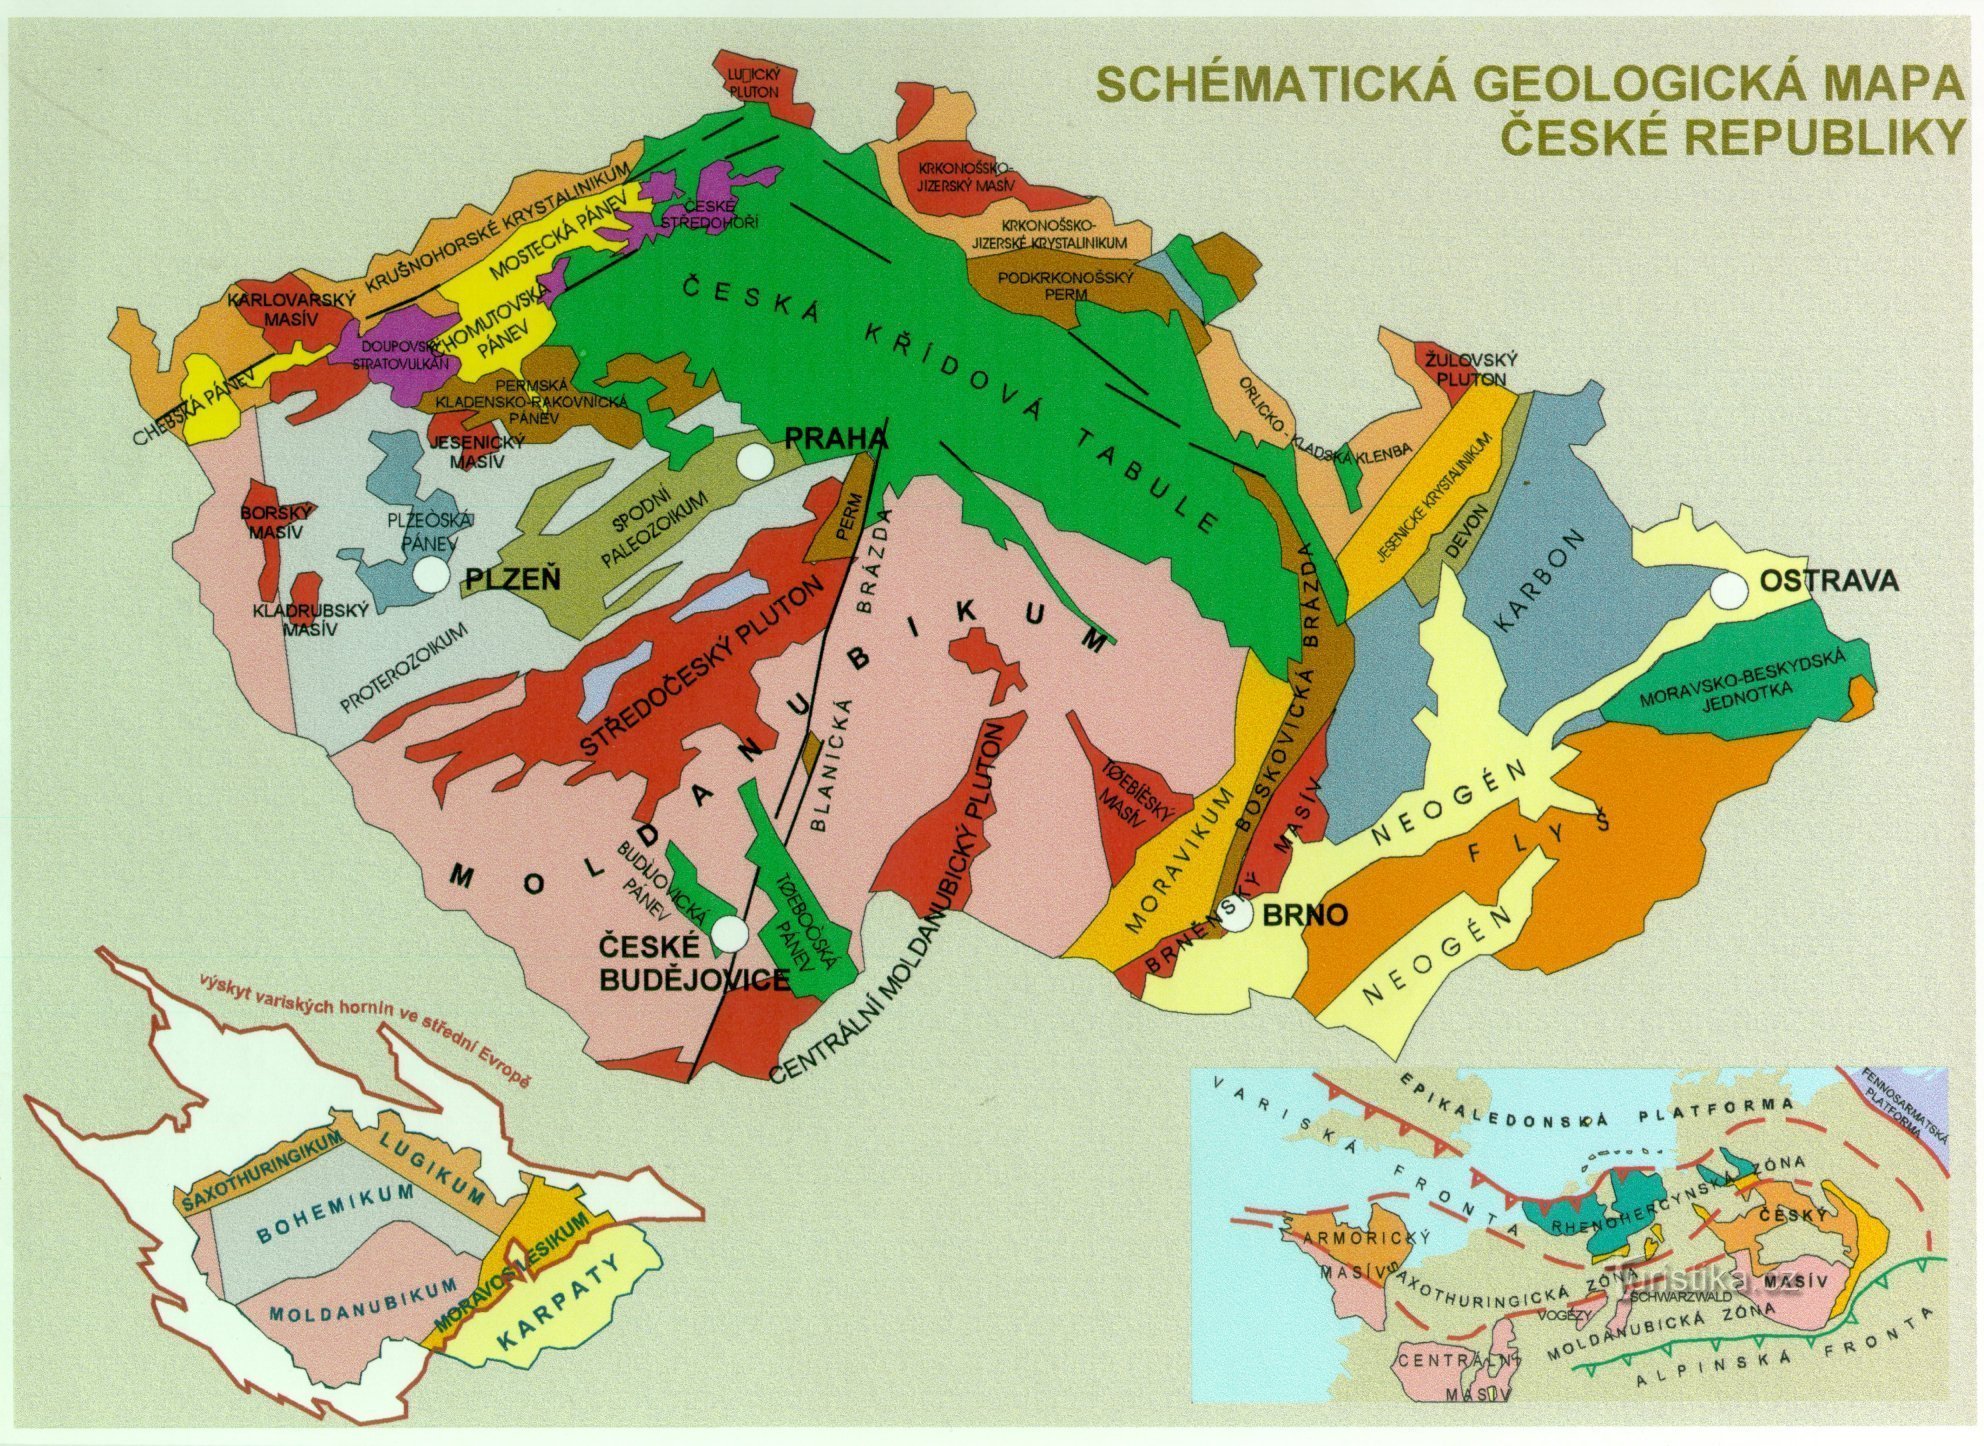 geološka karta Češke republike - dodatna slika k besedilu (s https://www.ig.